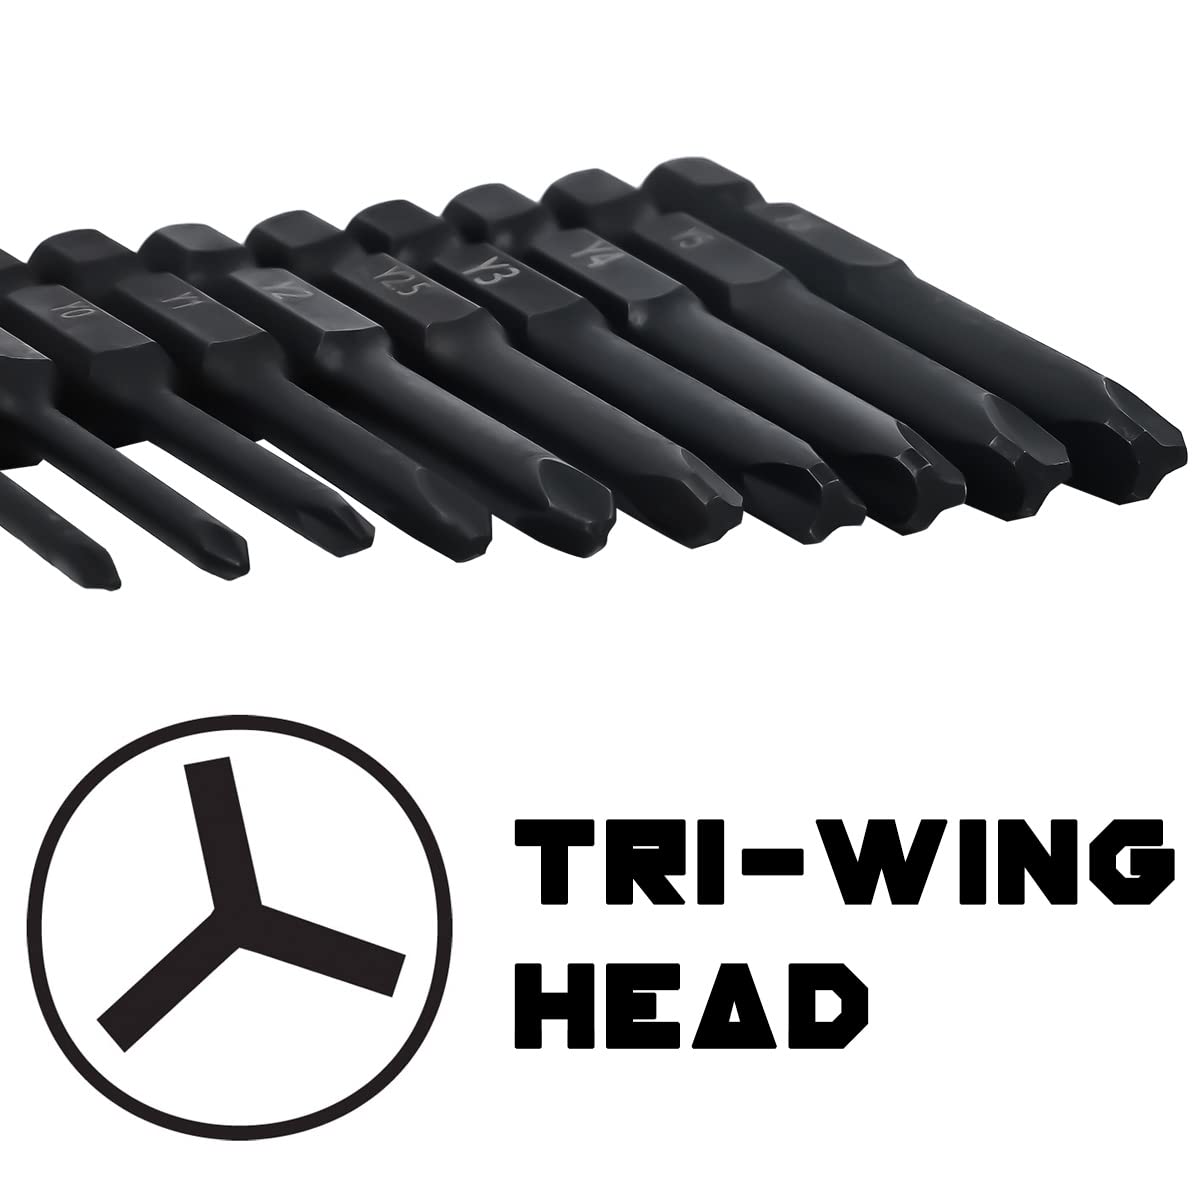 Owl Tools TriWing Bit Set (10 Pack - 2.3inches Long Magnetic Heads) In the Following Tri Wing Bits Screwdriver Sizes: Y000, Y00, Y0, Y1, Y2, Y2.5, Y3, Y4, Y5, and Y6